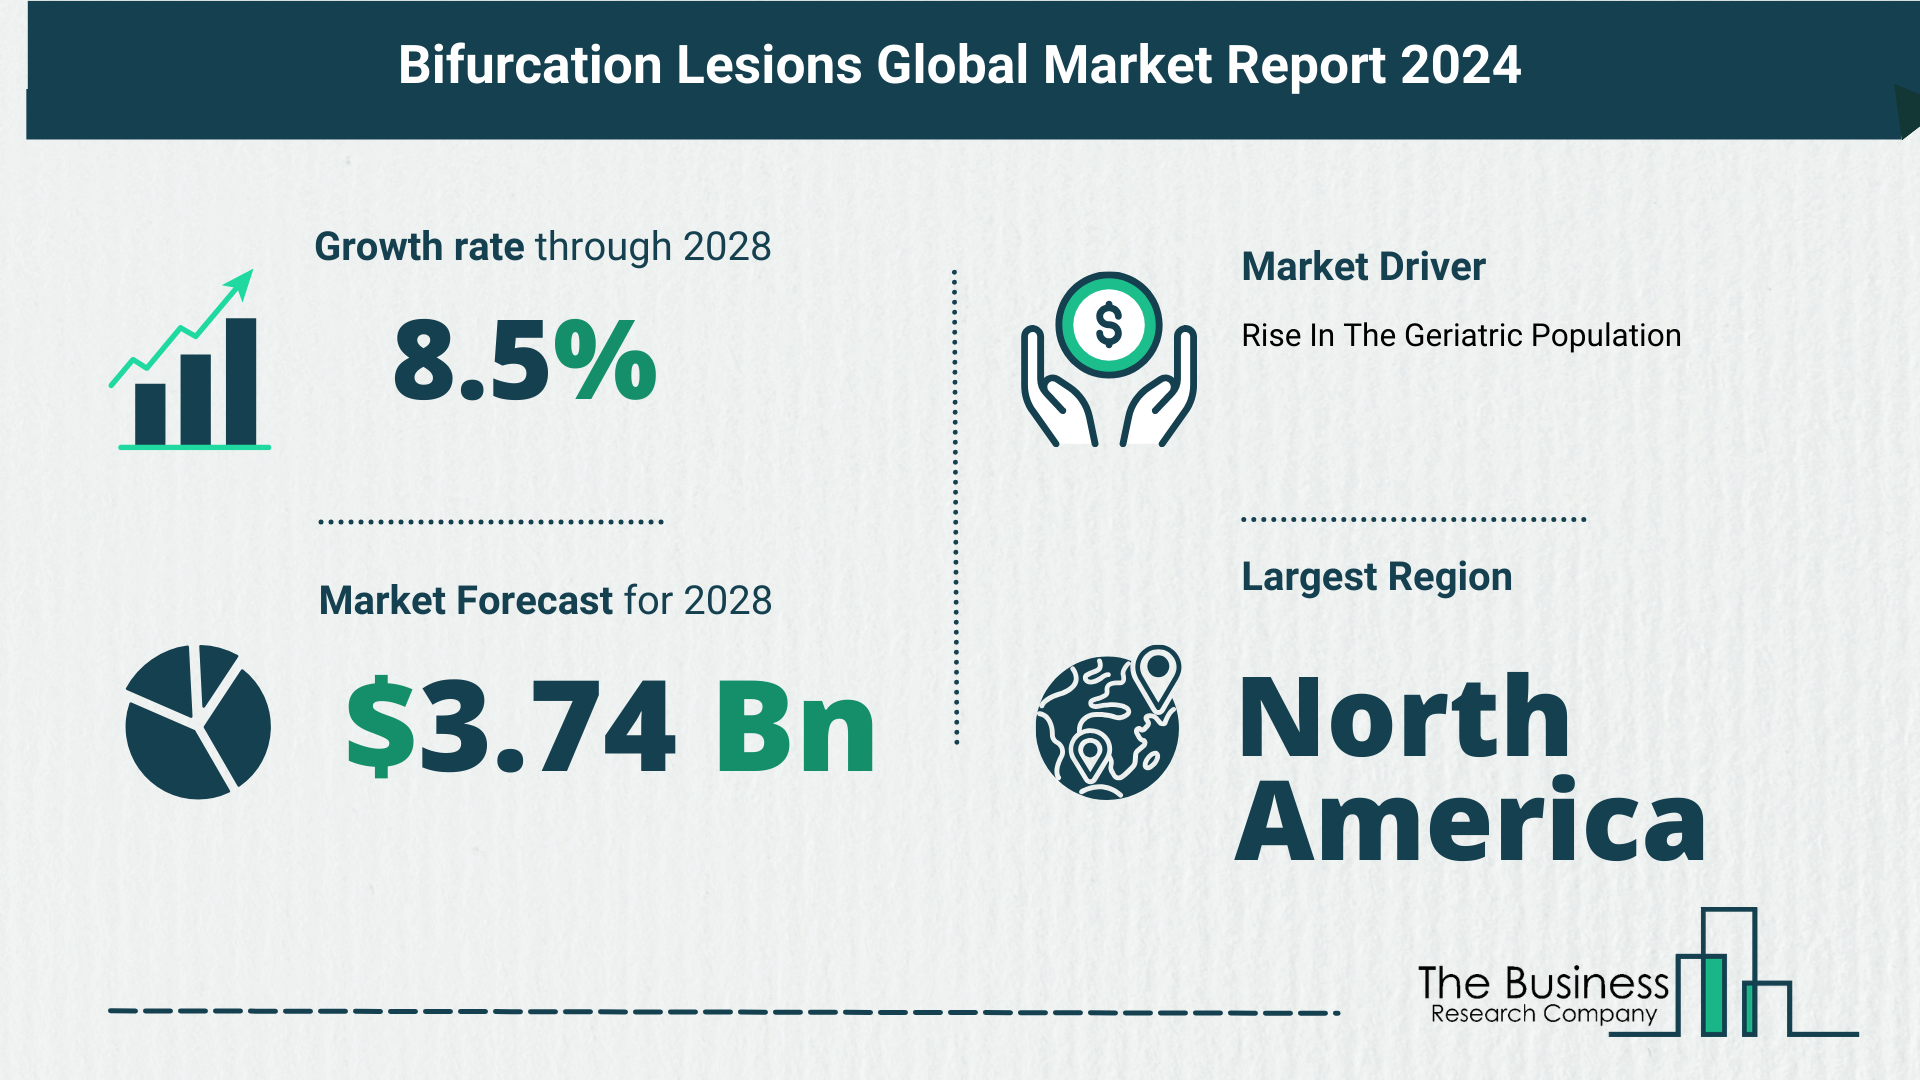 Global Bifurcation Lesions Market